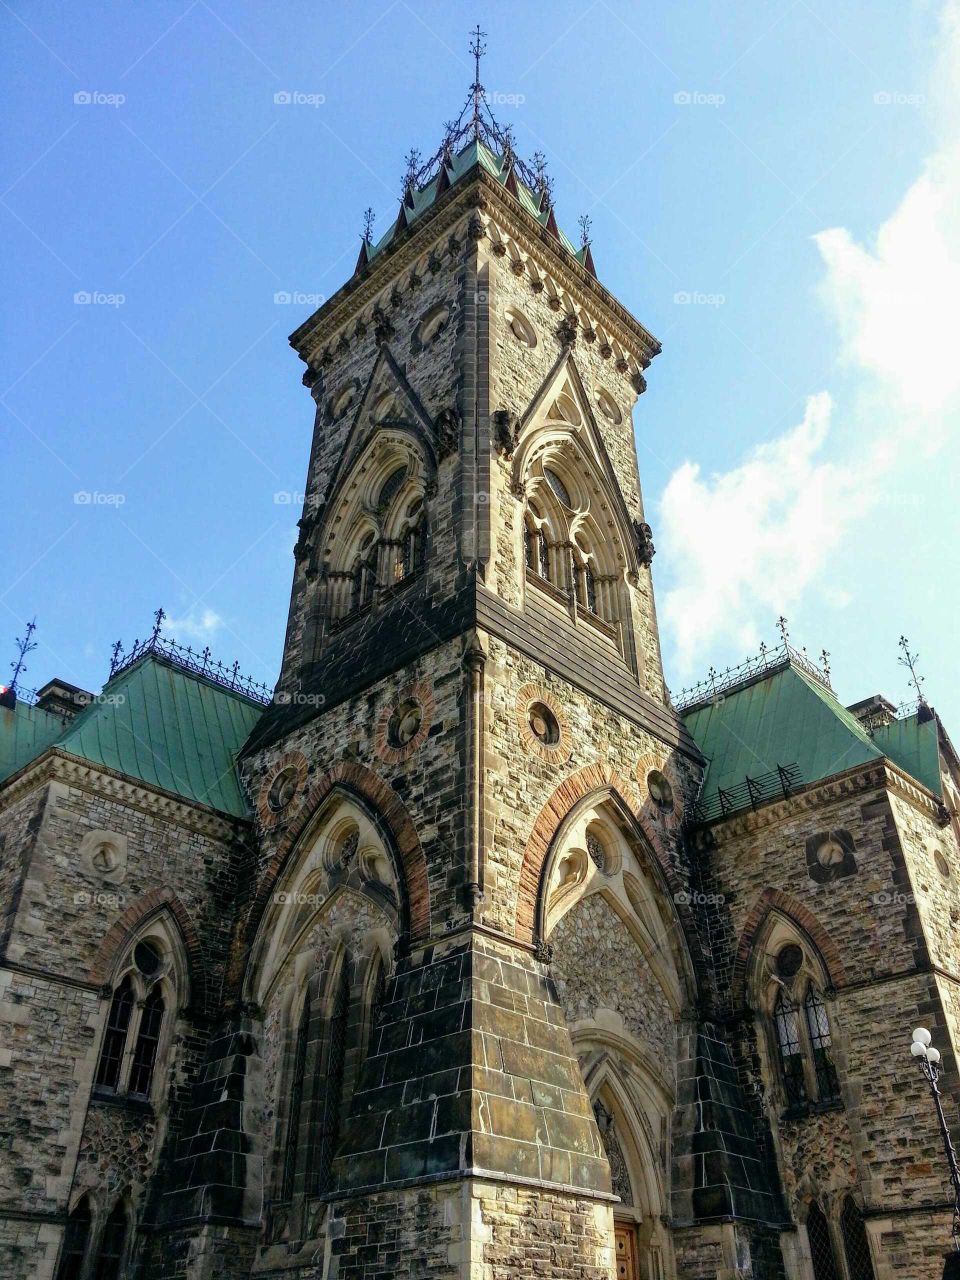 Old stone and brick church in Ottawa